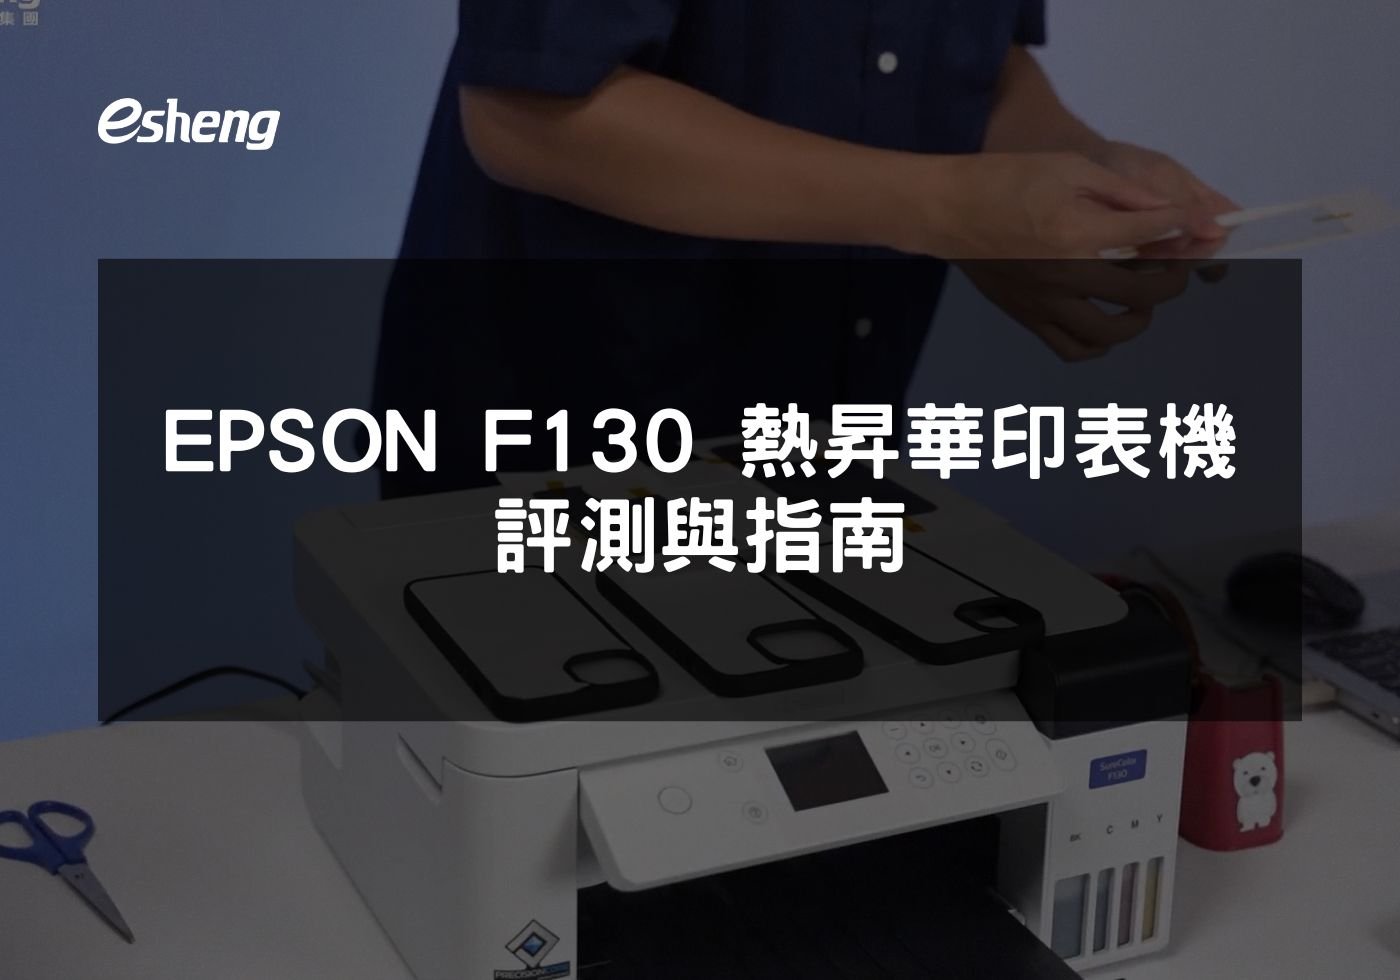 EPSON F130 熱昇華印表機評測與指南